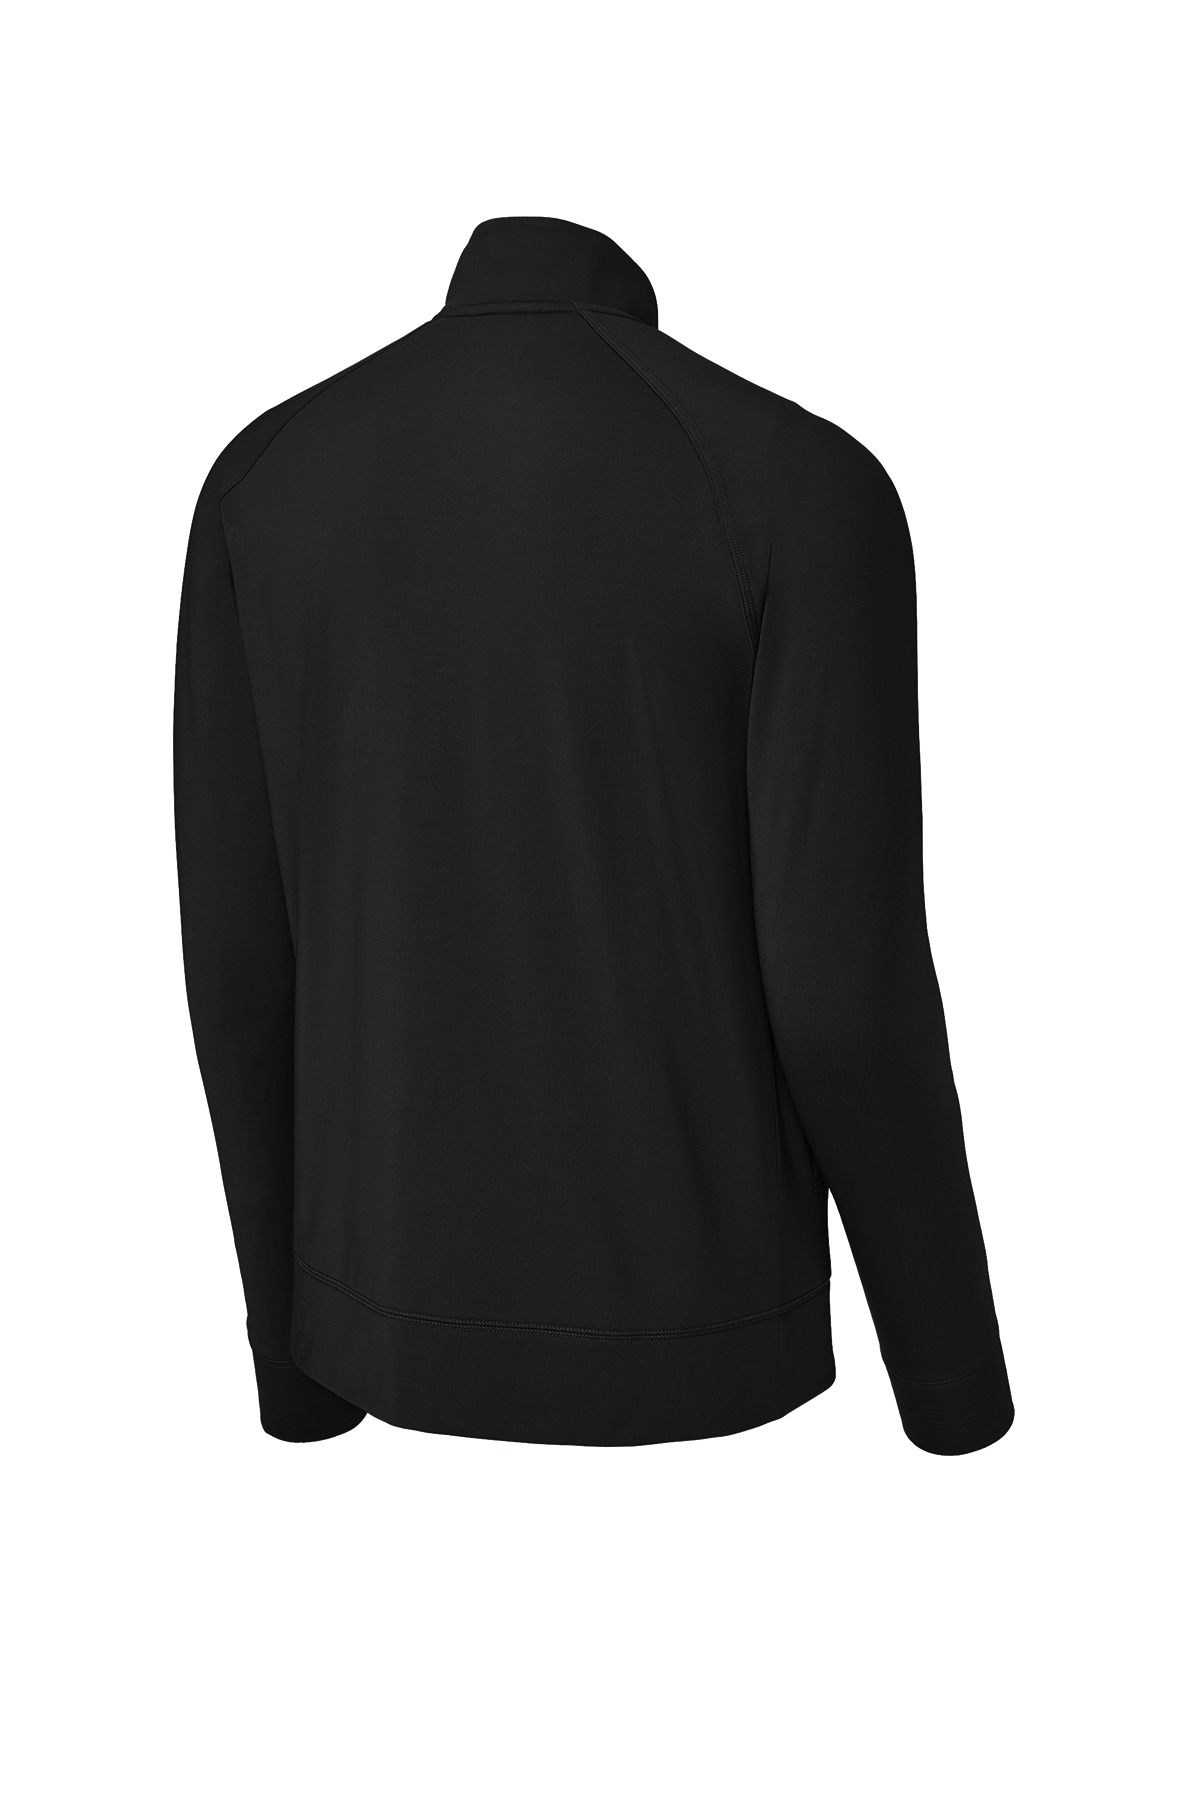 Sport-Tek Sport-Wick Stretch Full-Zip Cadet Jacket | Product | SanMar